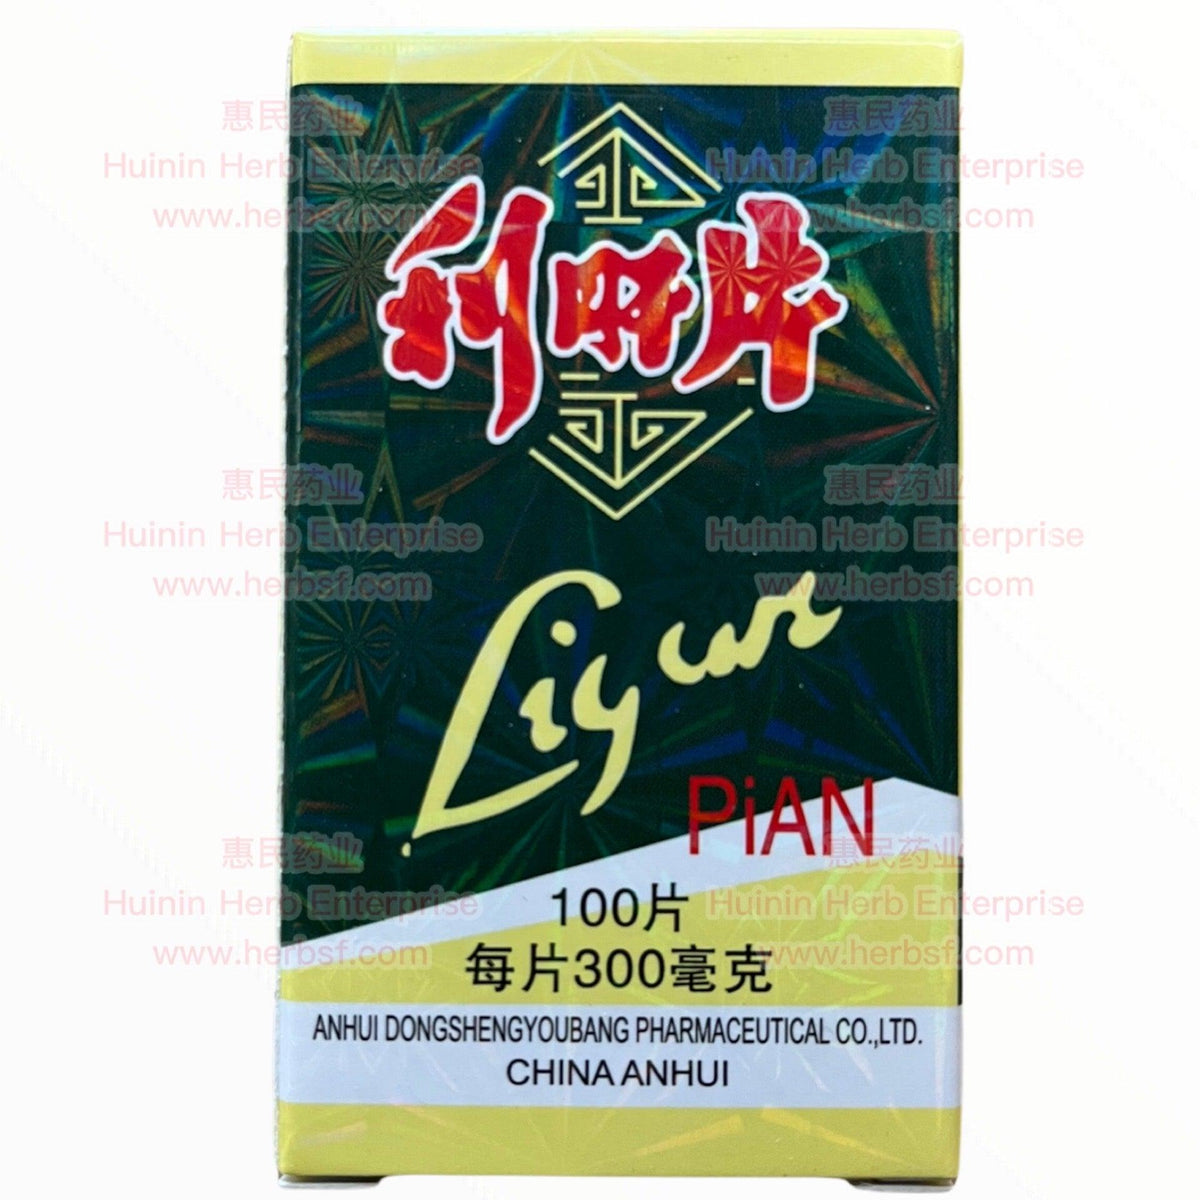 Li Gan Pian - Huimin Herb Online, LLC